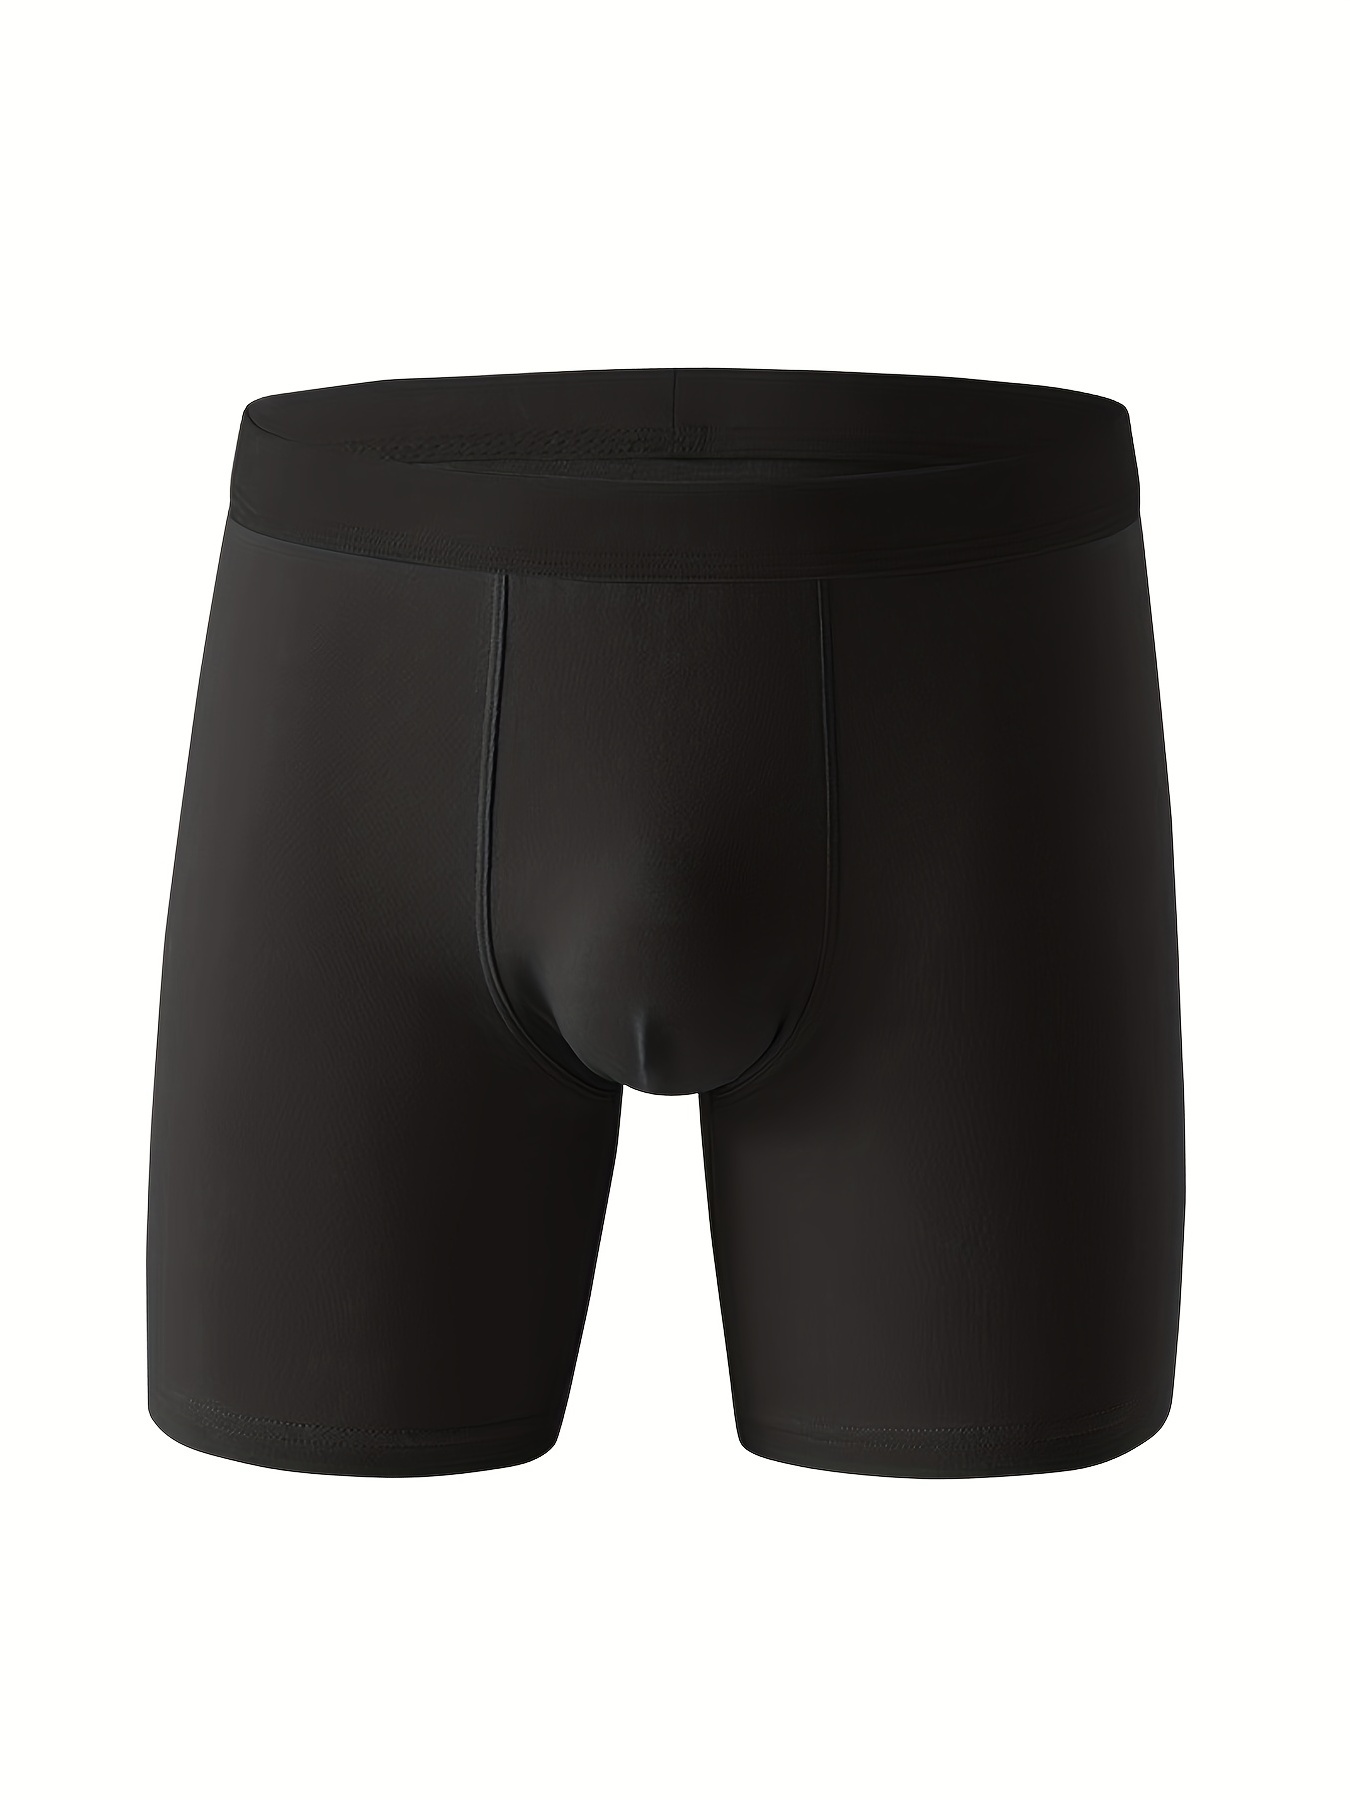 VVGHOPOI Mens England Boxer Briefs Stretch Underwear For Men Black at   Men's Clothing store